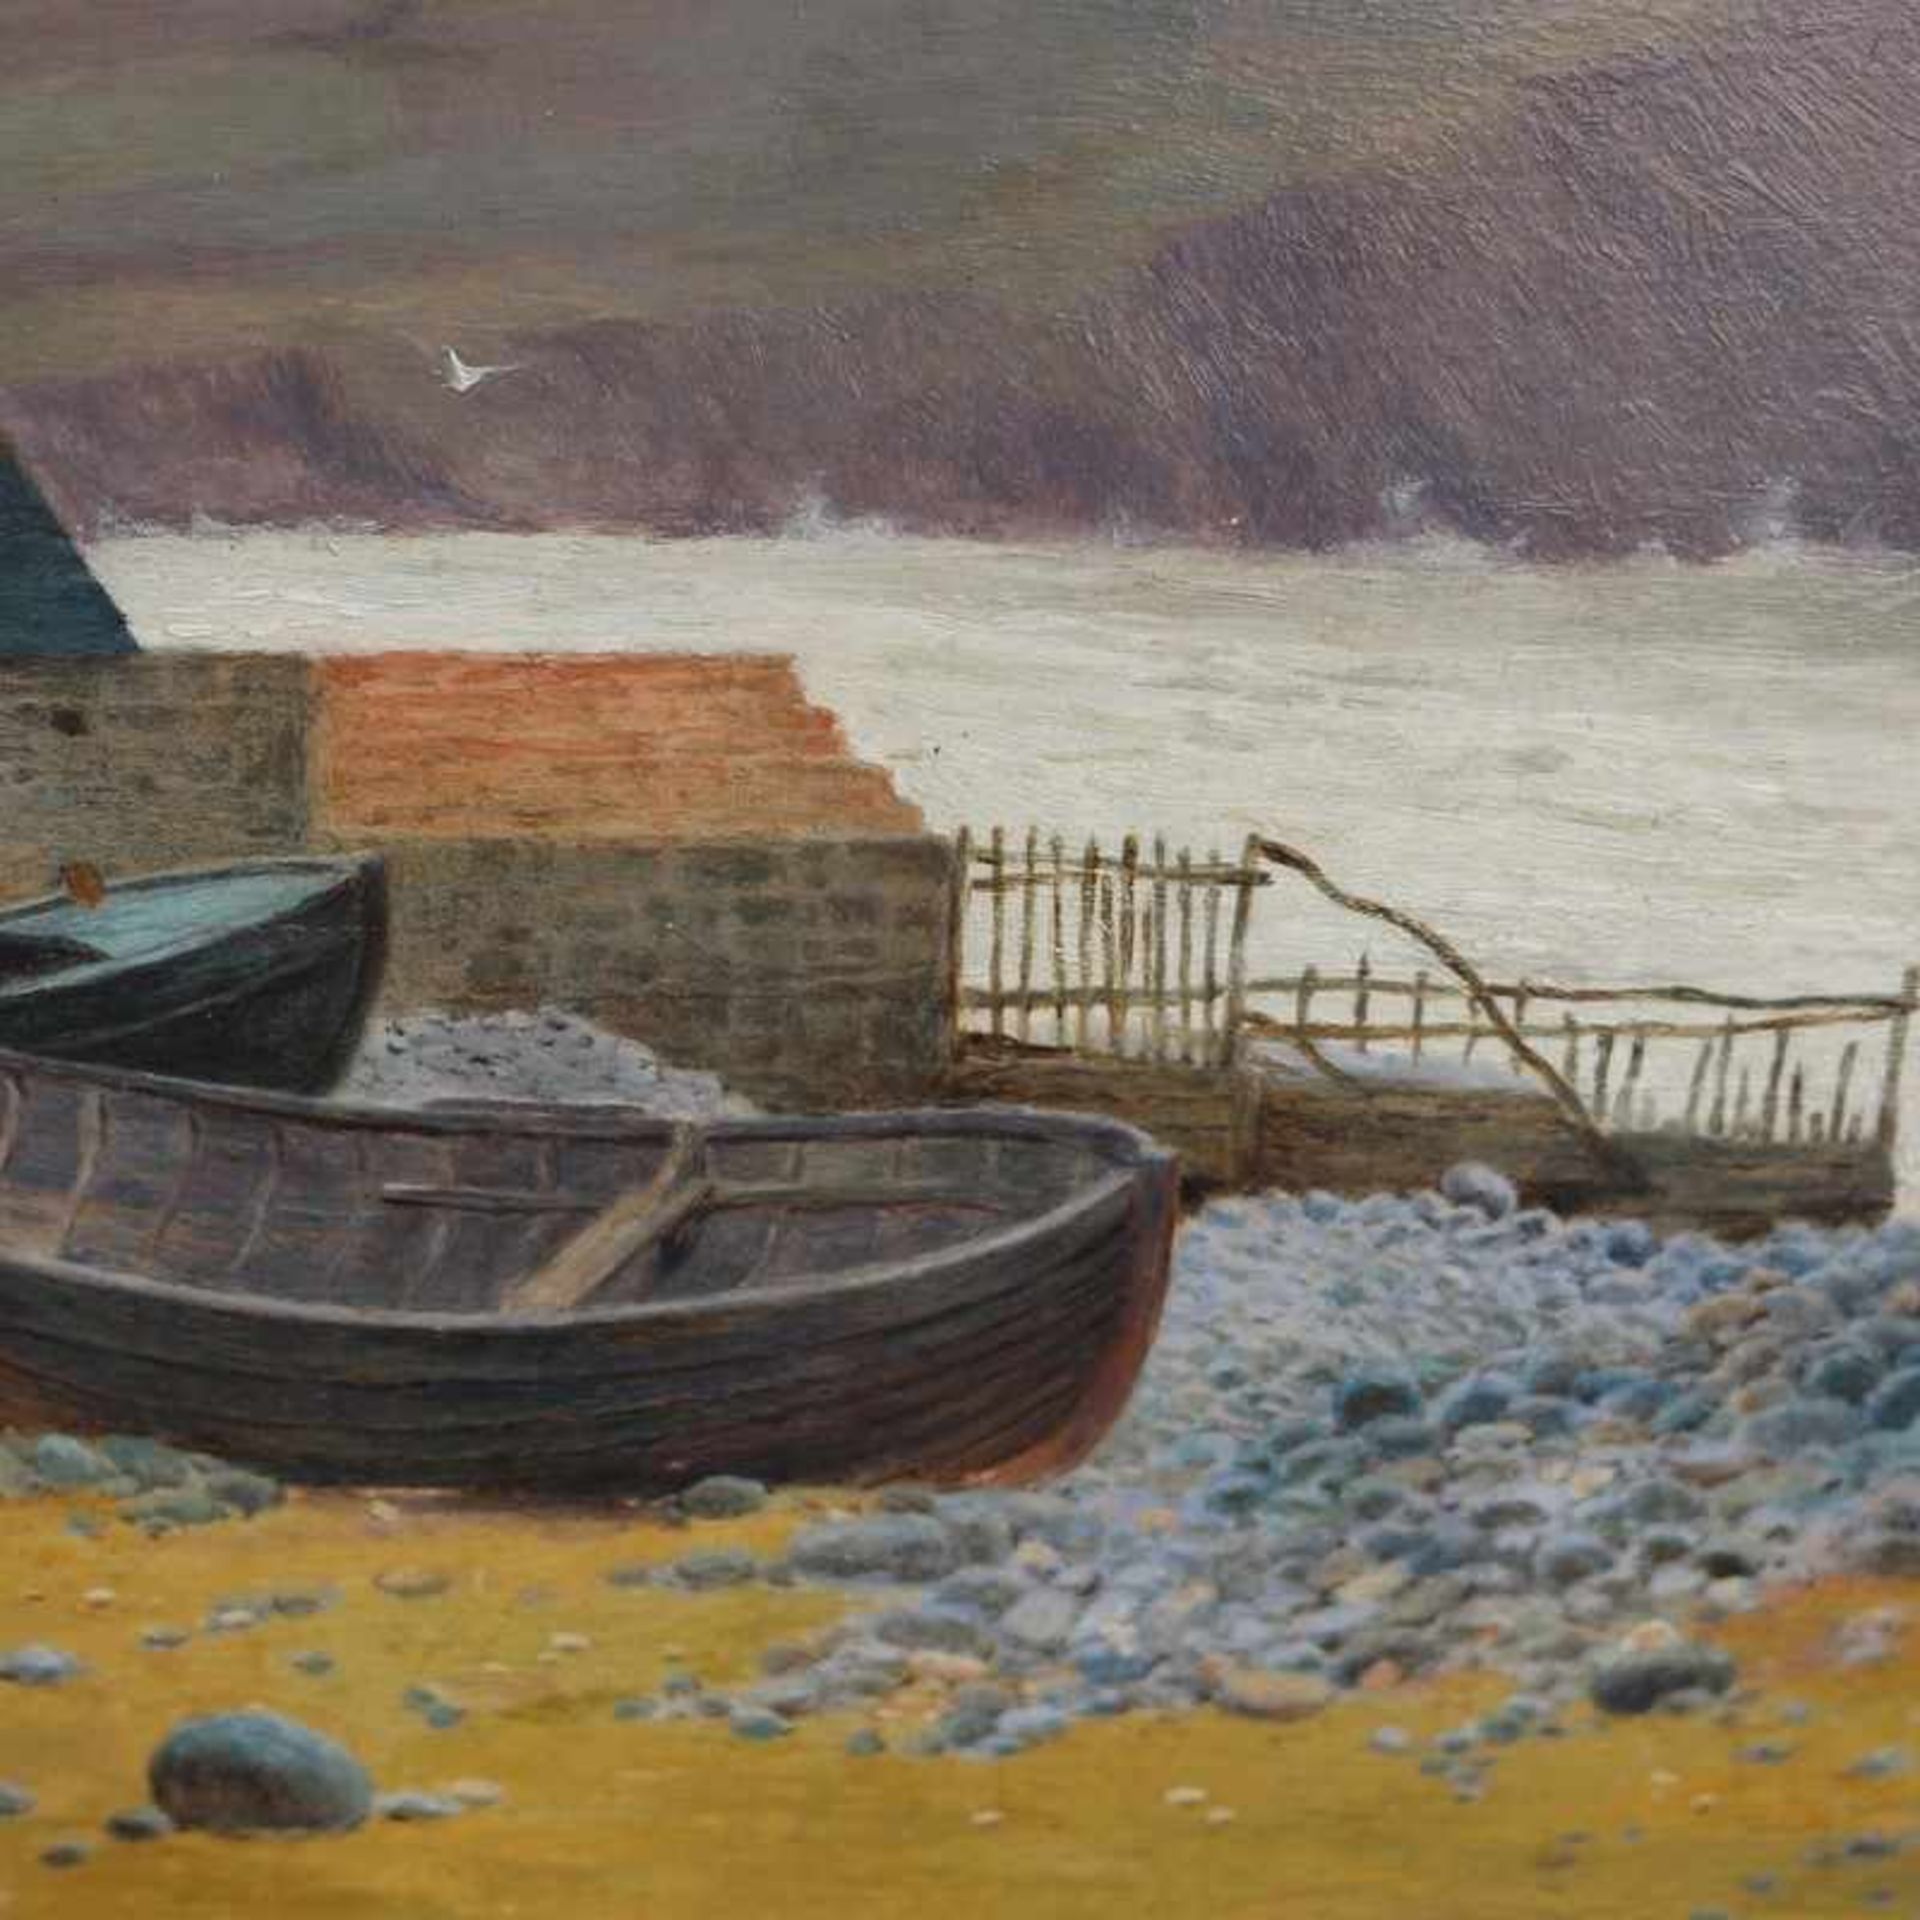 Cooke, Edward William 1811 London-1880 Groombridge, engl. Landschafts-/Marinemaler, " - Bild 2 aus 3